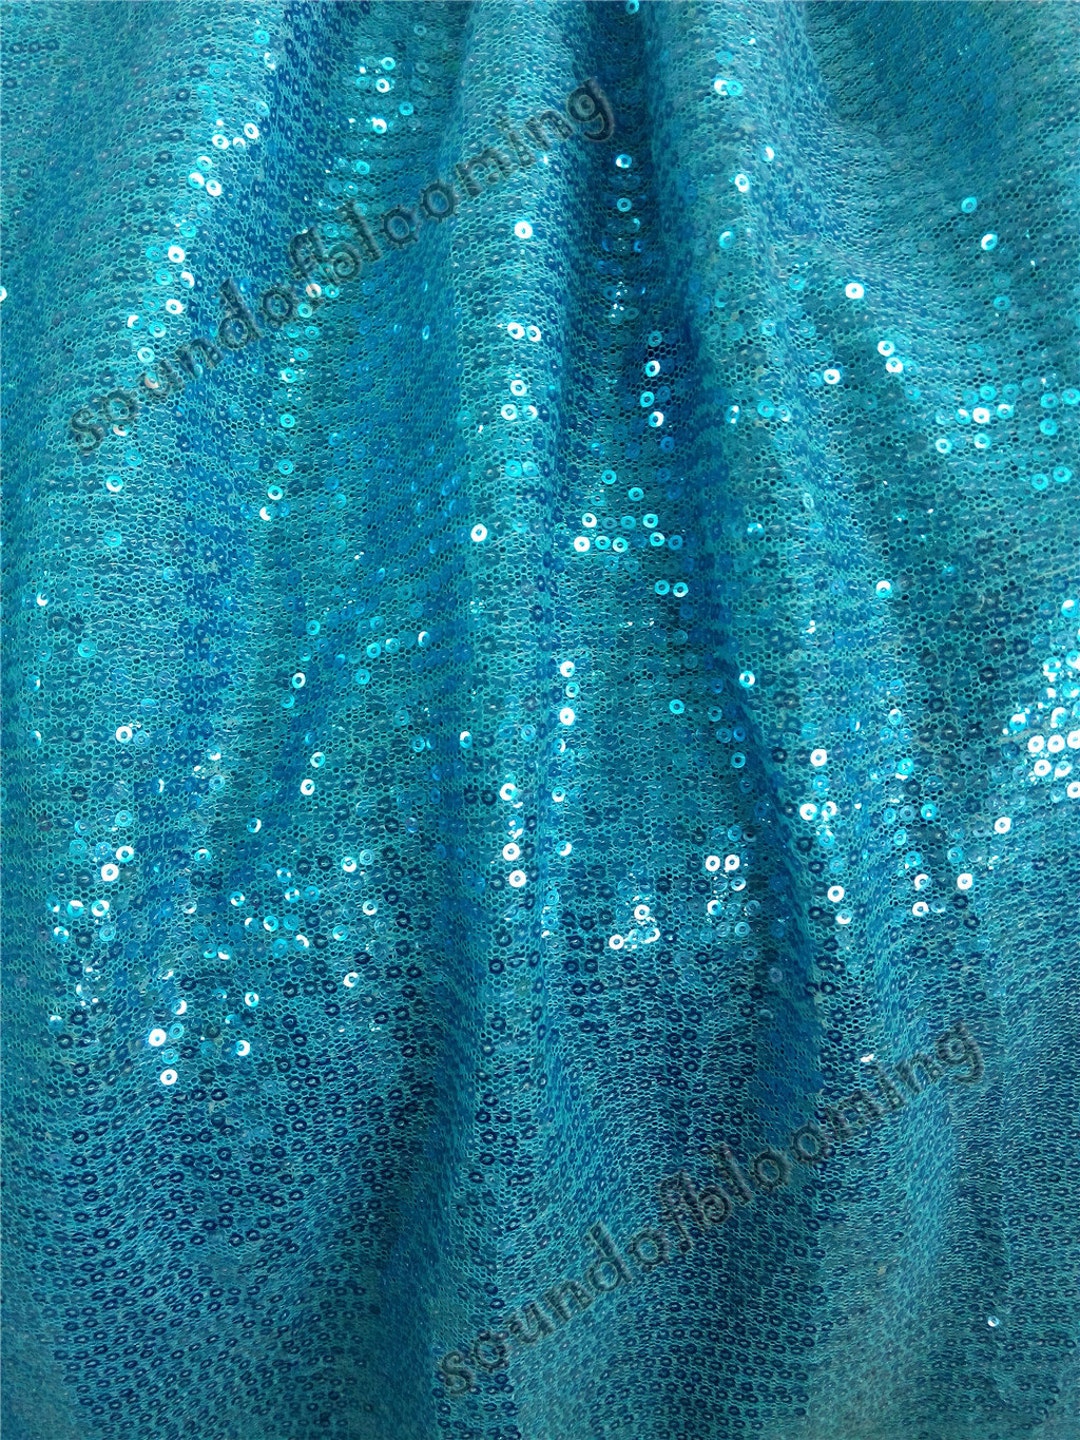 Frozen Fabric Queen Elsa Inspired Rectangle Rounded Sequin - Etsy